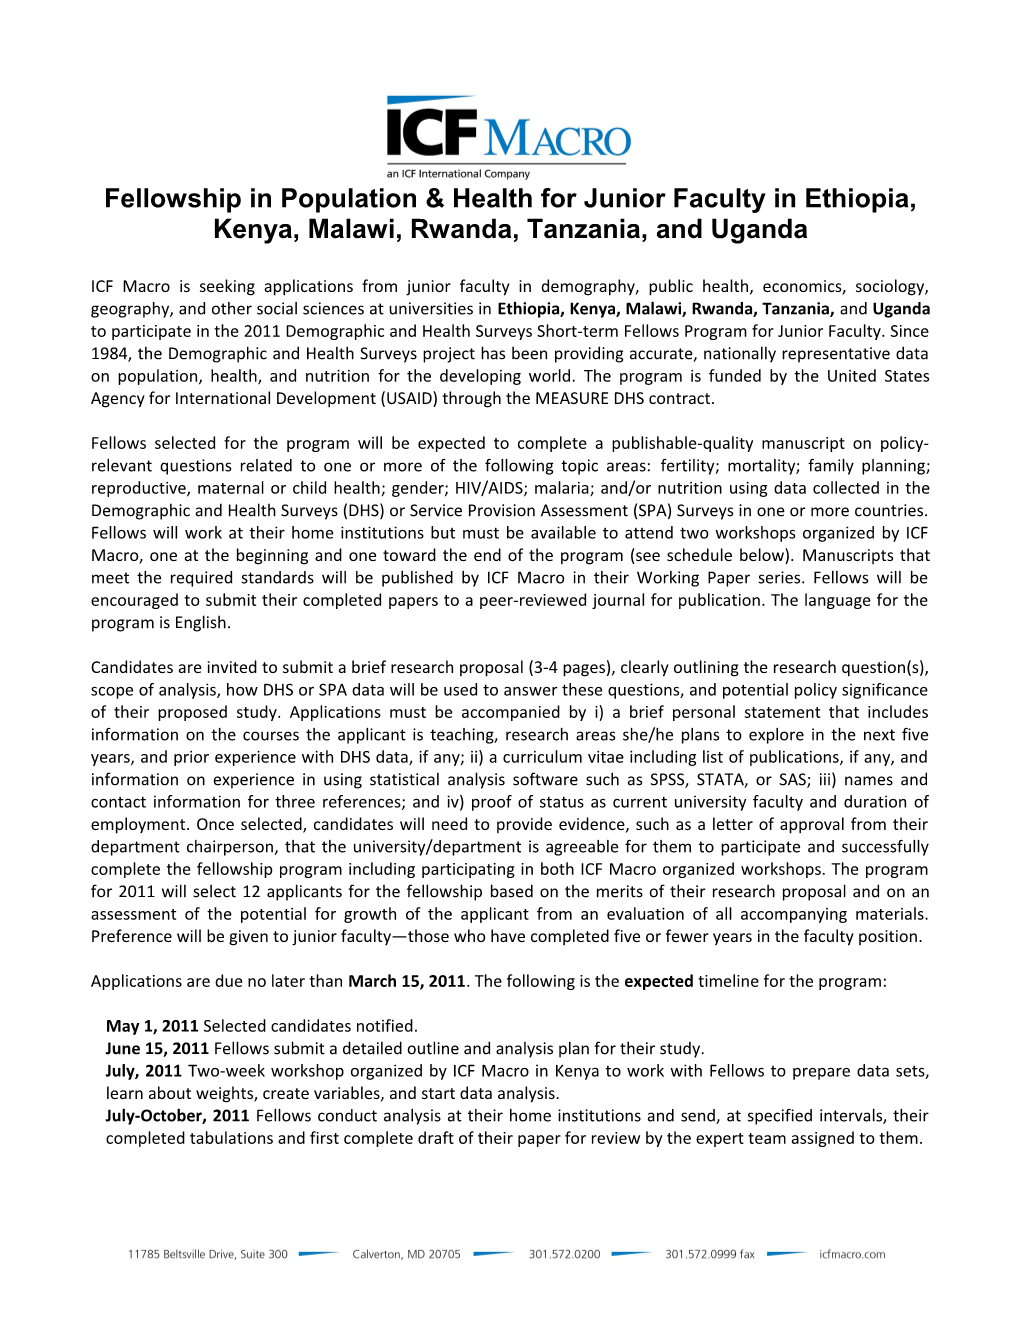 Fellowship in Population & Health for Junior Faculty in Ethiopia, Kenya, Malawi, Rwanda